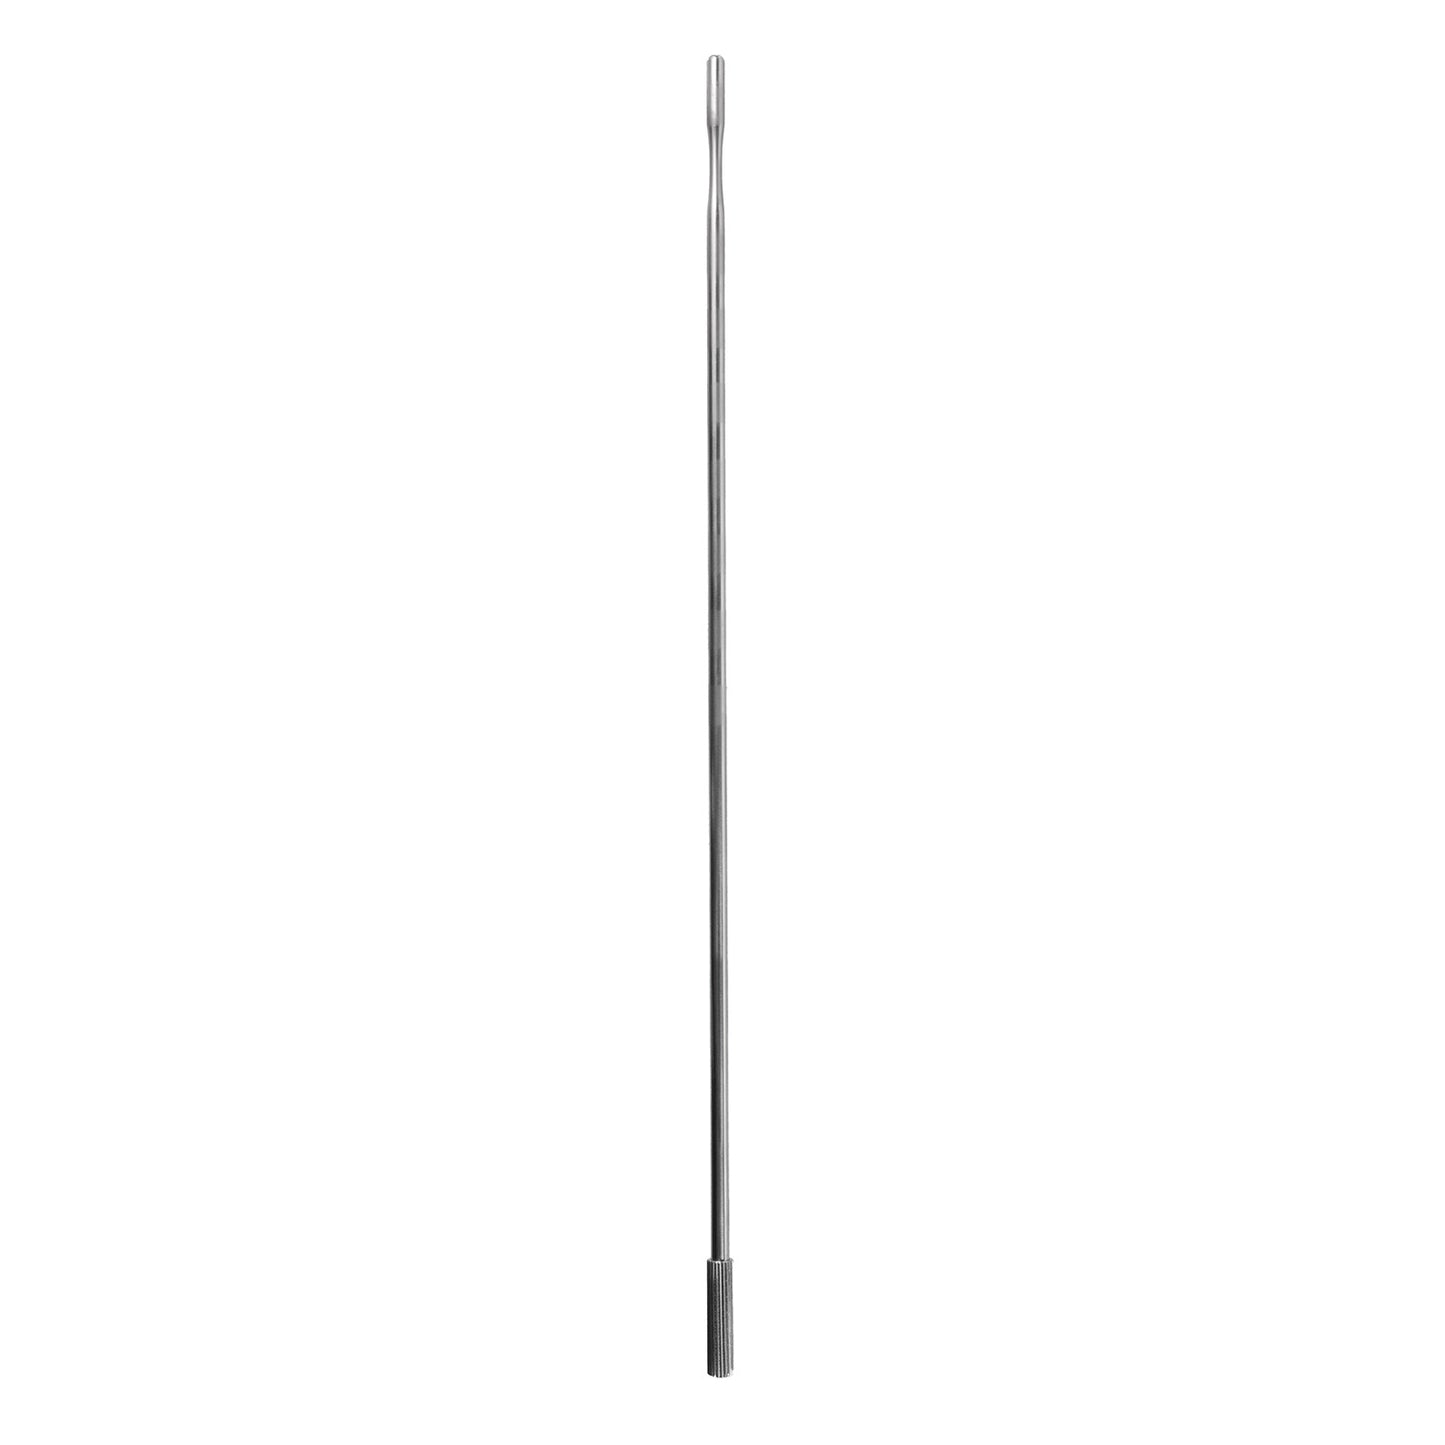 Diameter of Palpation Probe: 32 cm; 5 mm